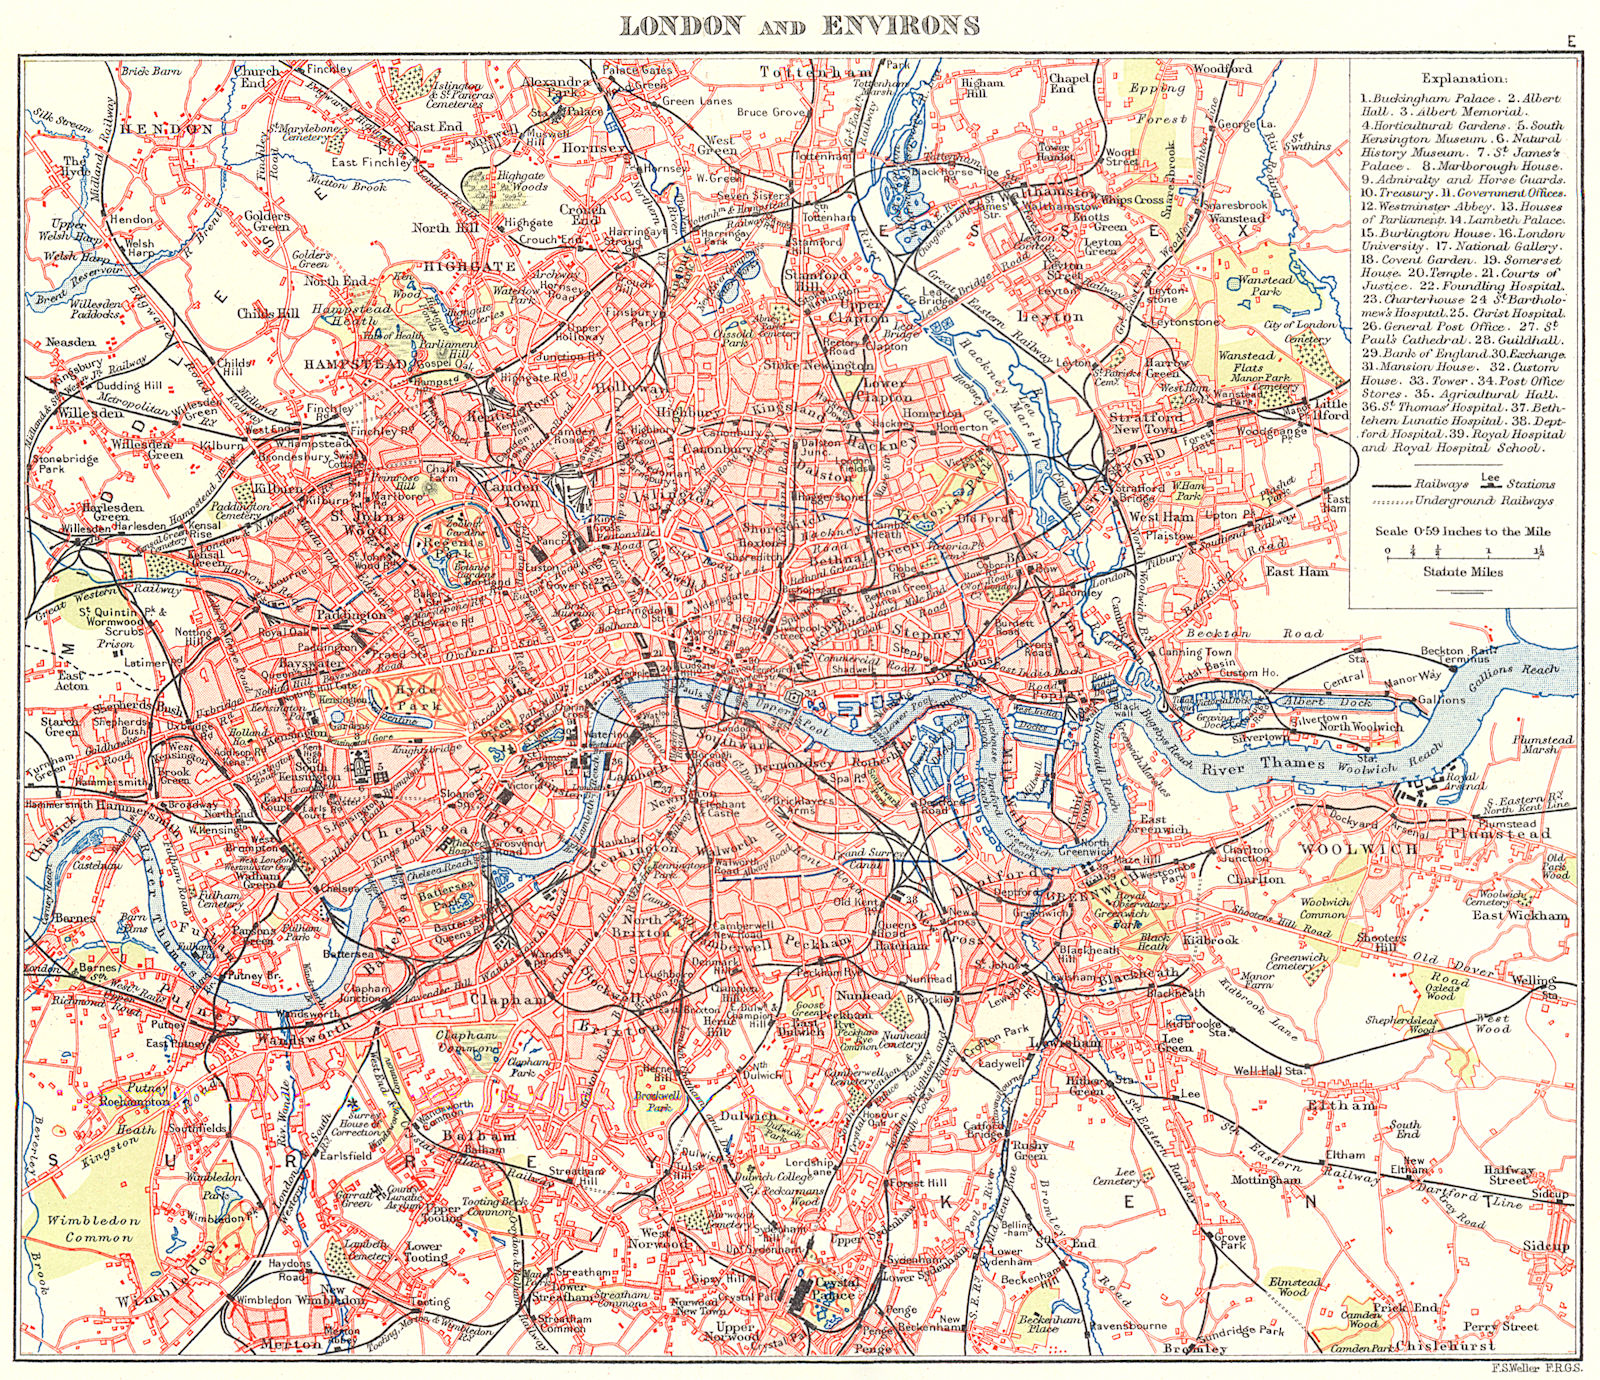 LONDON. Showing underground tube railways key buildings parks 1893 old map